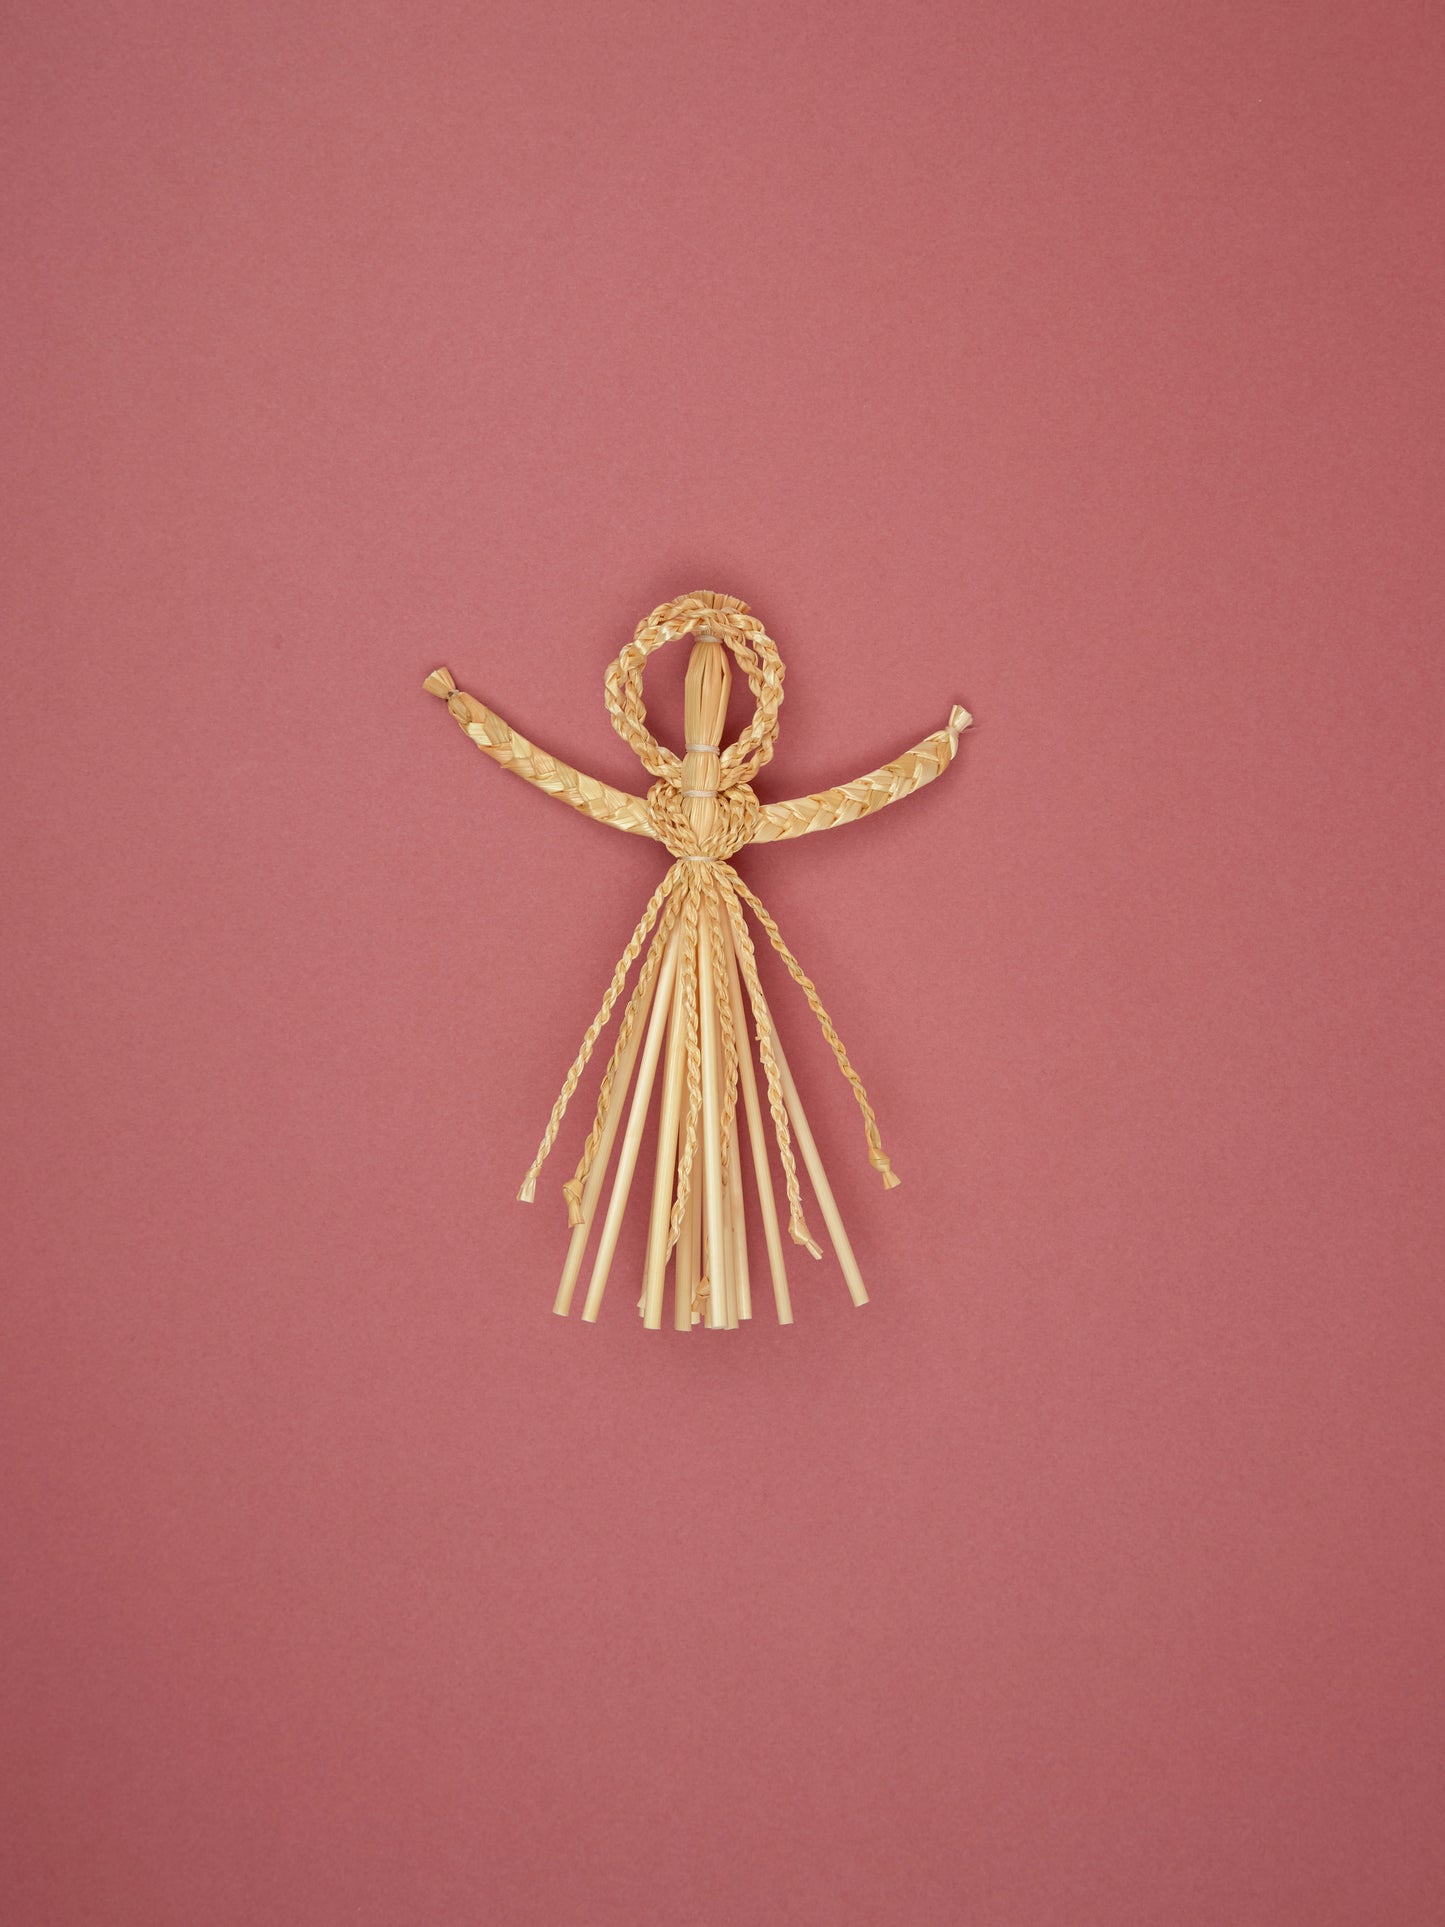 Ukrainian Straw Woman Ornament by Anna